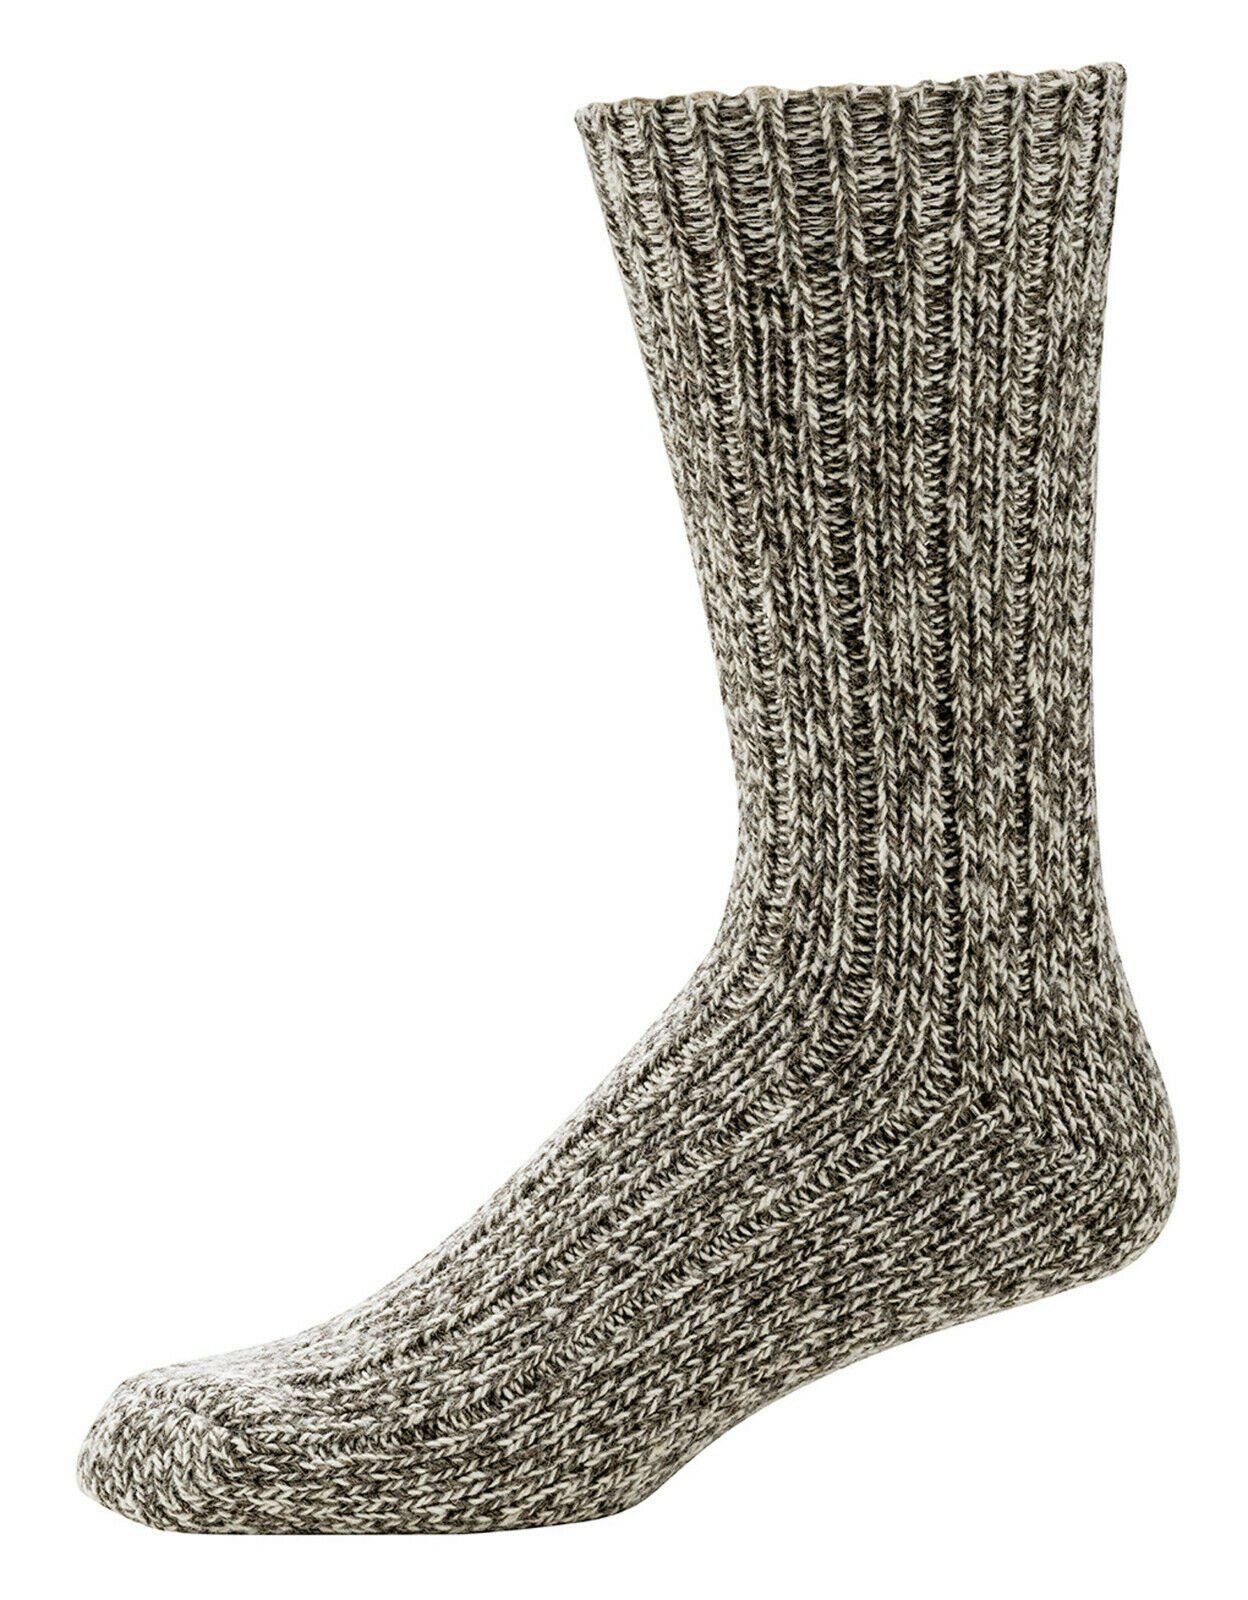 Norwegersocken (3 Paar) Baumwolle Viskose Socken weiche Warme Wowerat mit Norweger Wolle